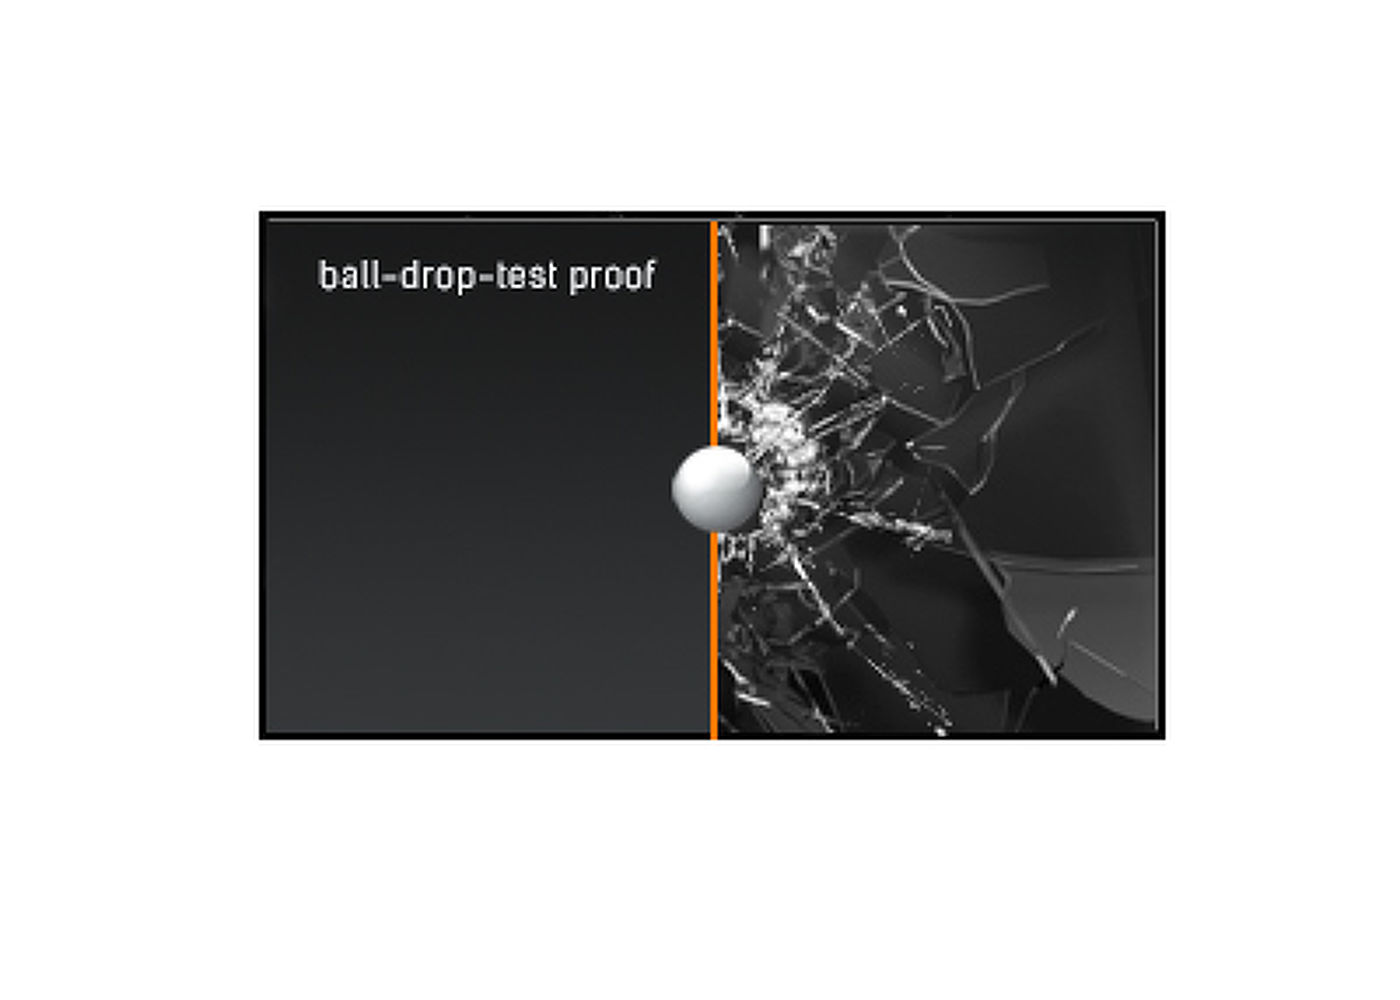 Ball-drop-test proof